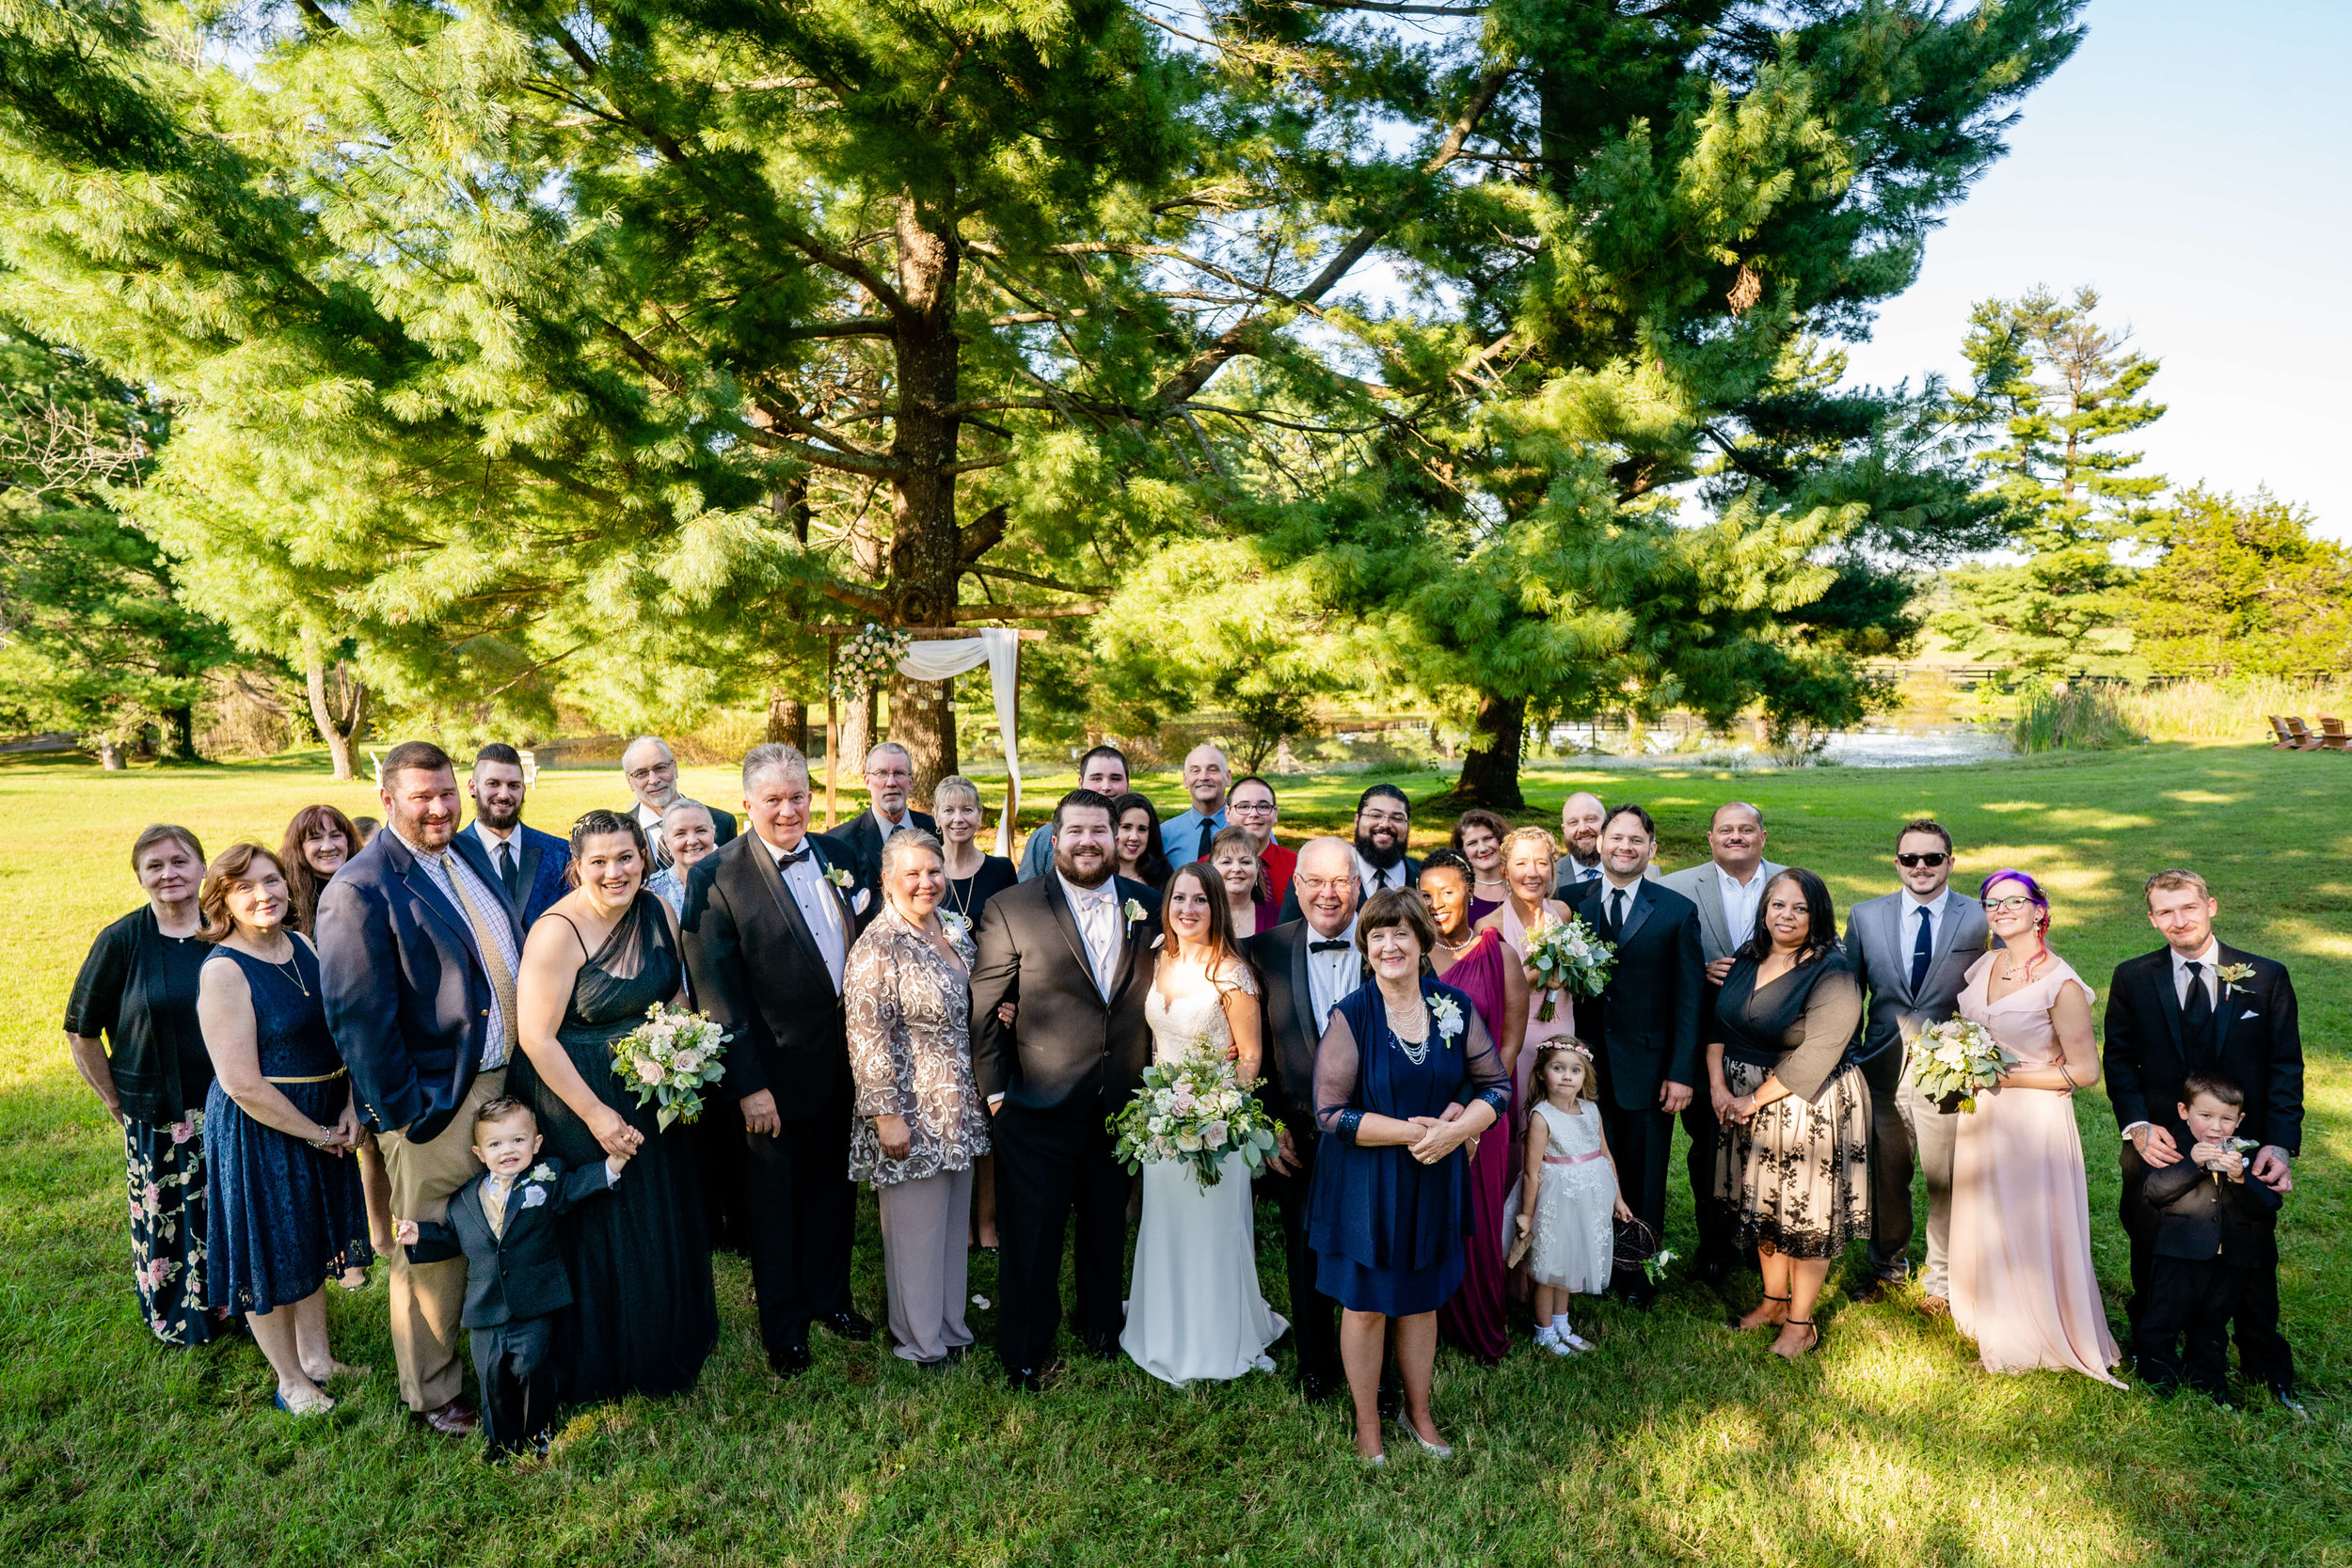 Anslie Tyler Airlie Virginia Smoke Room Wedding in the Woods Small Wedding Ceremony Outdoor Ceremony - 44.jpg